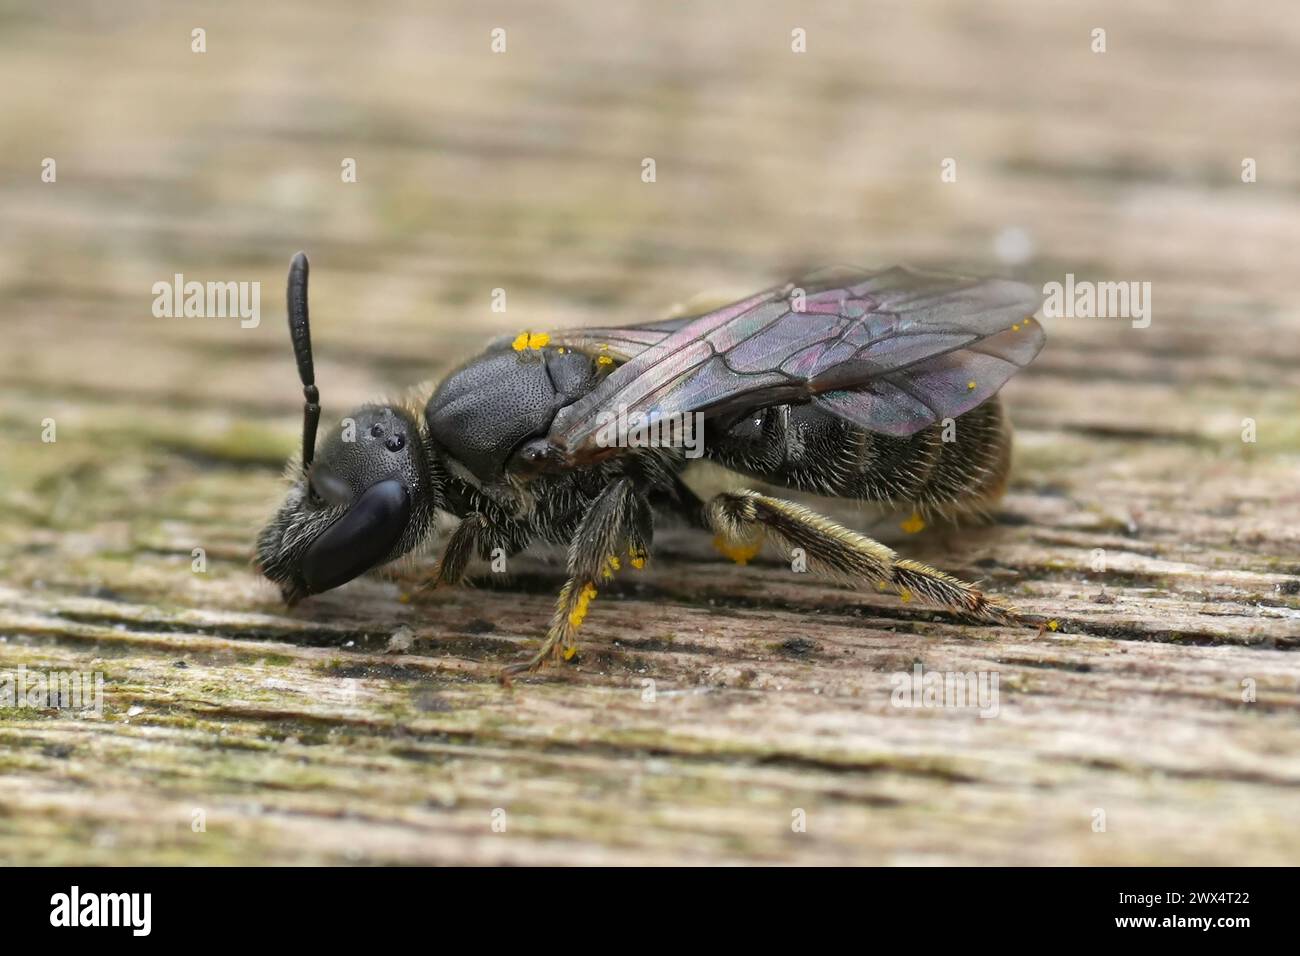 Detailed extreme closeup on a female Long-faced furrow bee, Lasioglossum punctatissimum sitting on wood Stock Photo